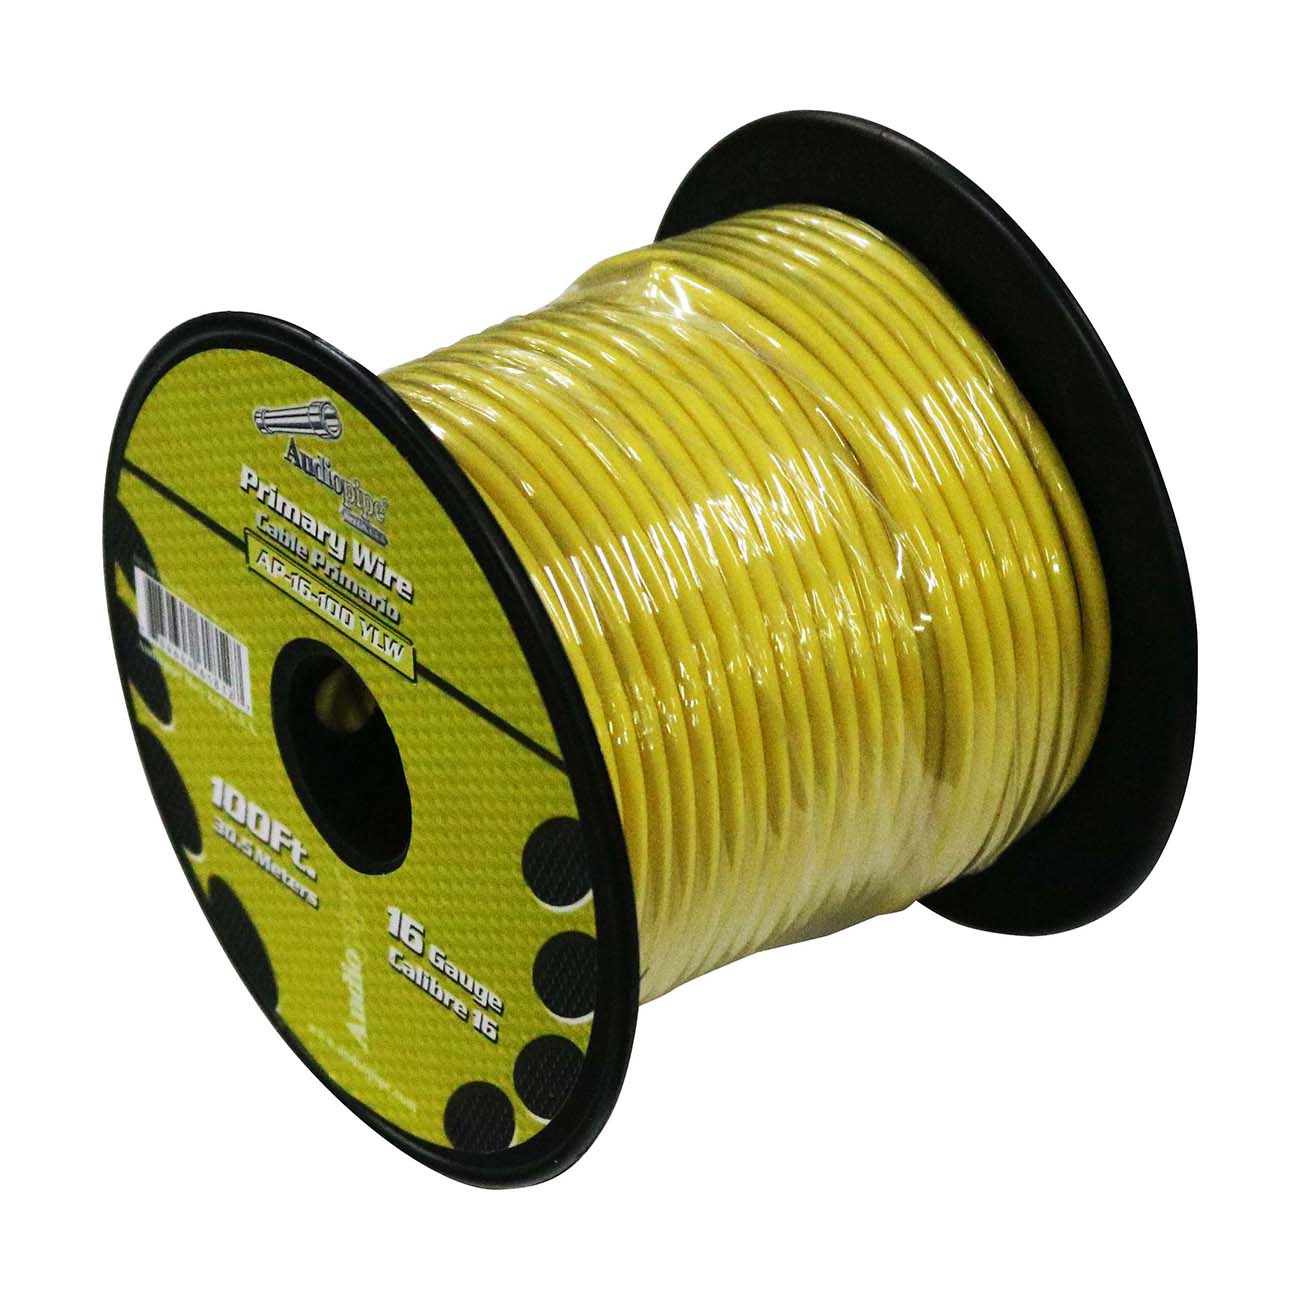 Audiopipe 16 Gauge 100ft Yellow Primary Wire